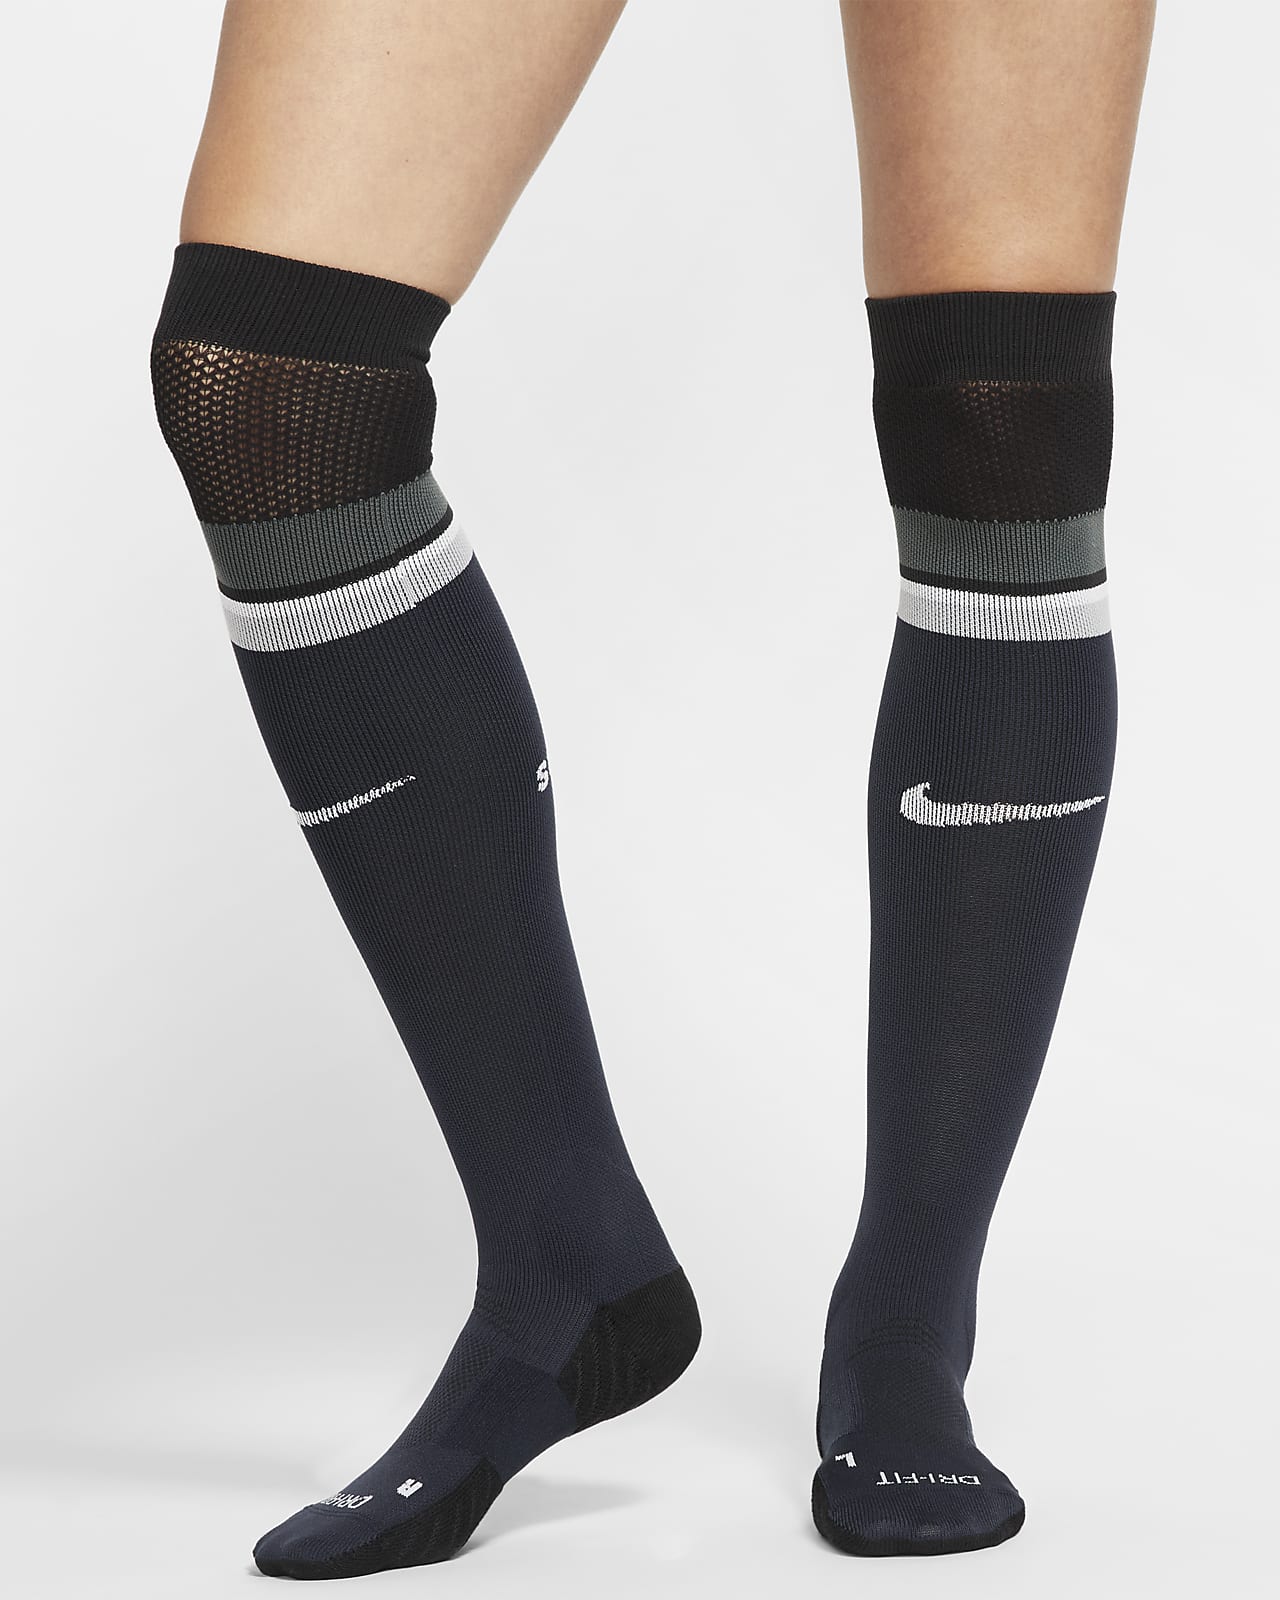 Nike x Sacai Women's Knee-High Socks 